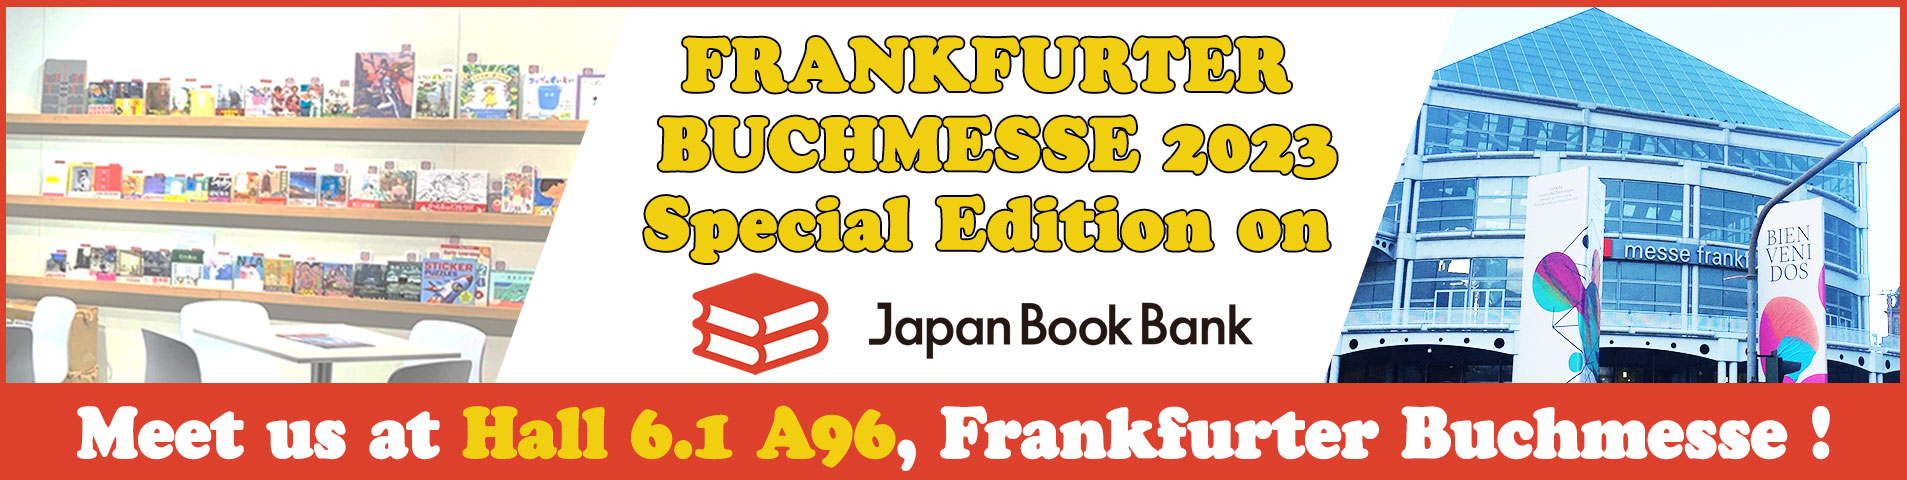 ～FRANKFURTER BUCHMESSE 2023 Special Edition on Japan Book Bank～